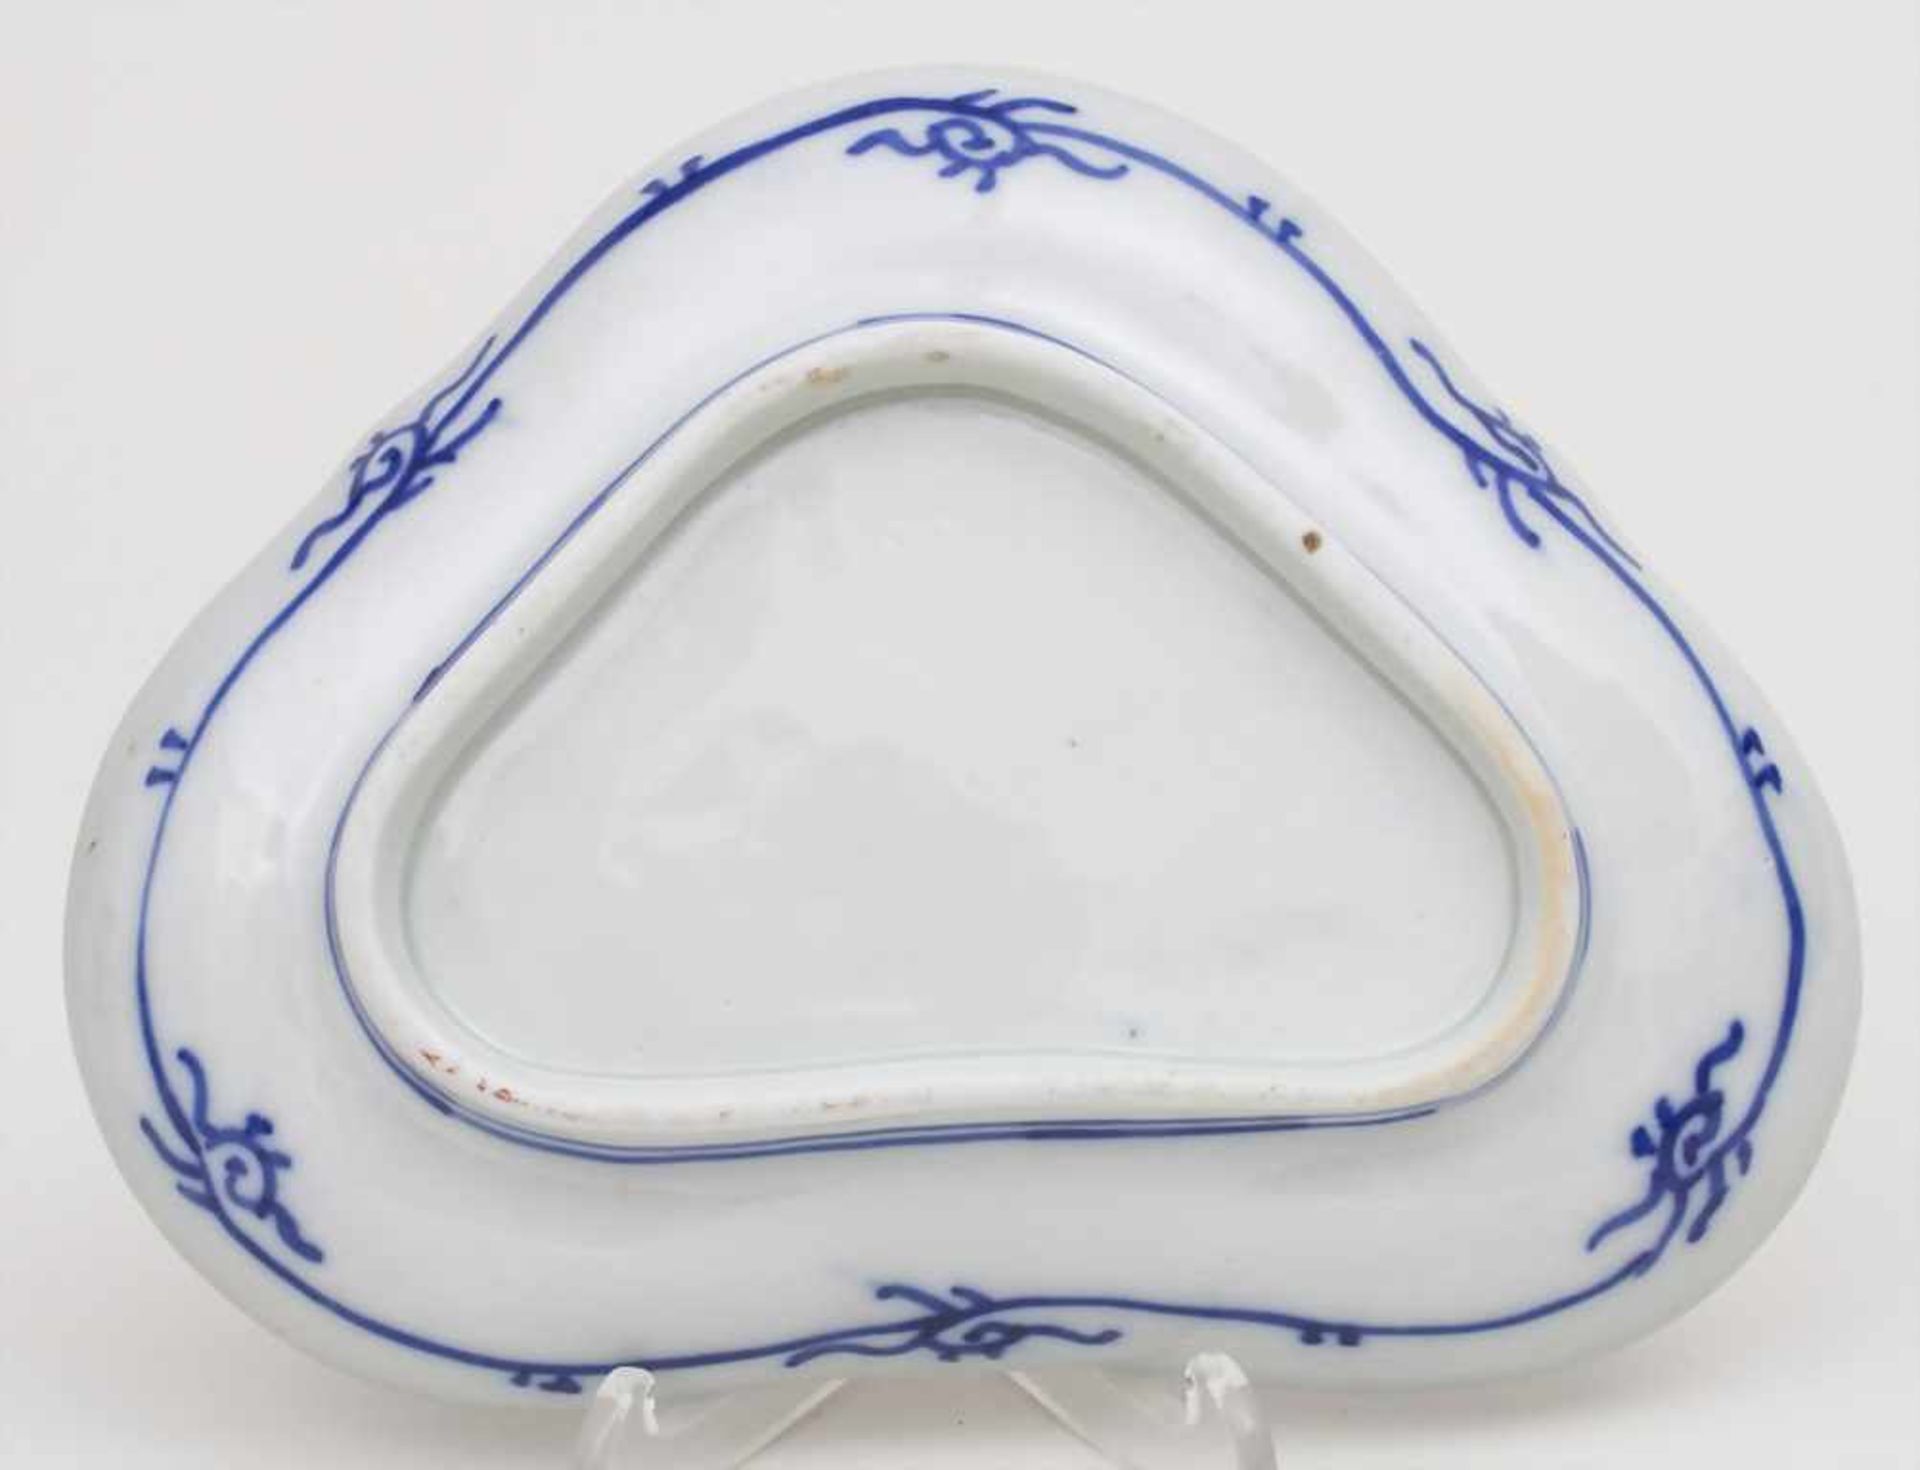 2 Imari-Schalen / Two Imari bowls, Japan, 18./19. Jh.Material: Porzellan, mit Emailfarben bemalt, - Bild 5 aus 5